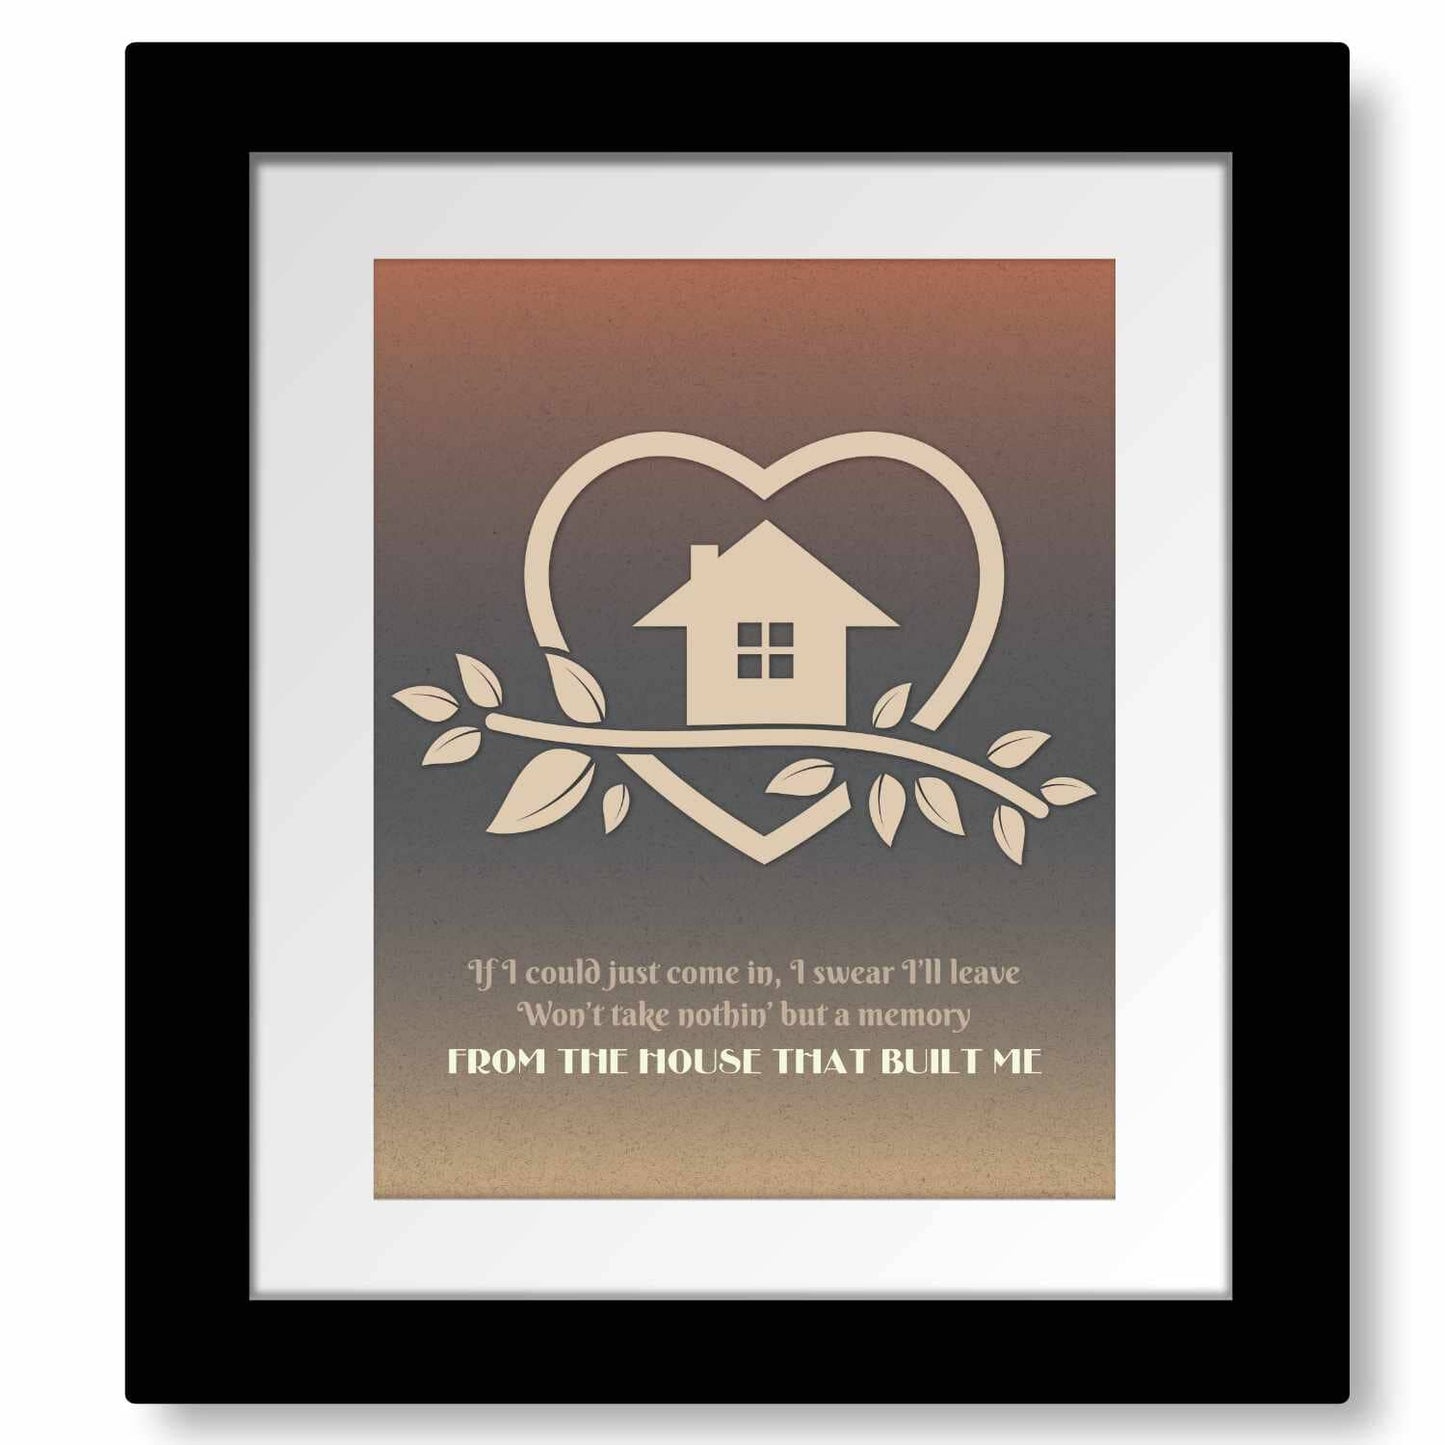 The House that Built Me by Miranda Lambert - Pop Country Art Song Lyrics Art Song Lyrics Art 8x10 Matted / Framed Print 